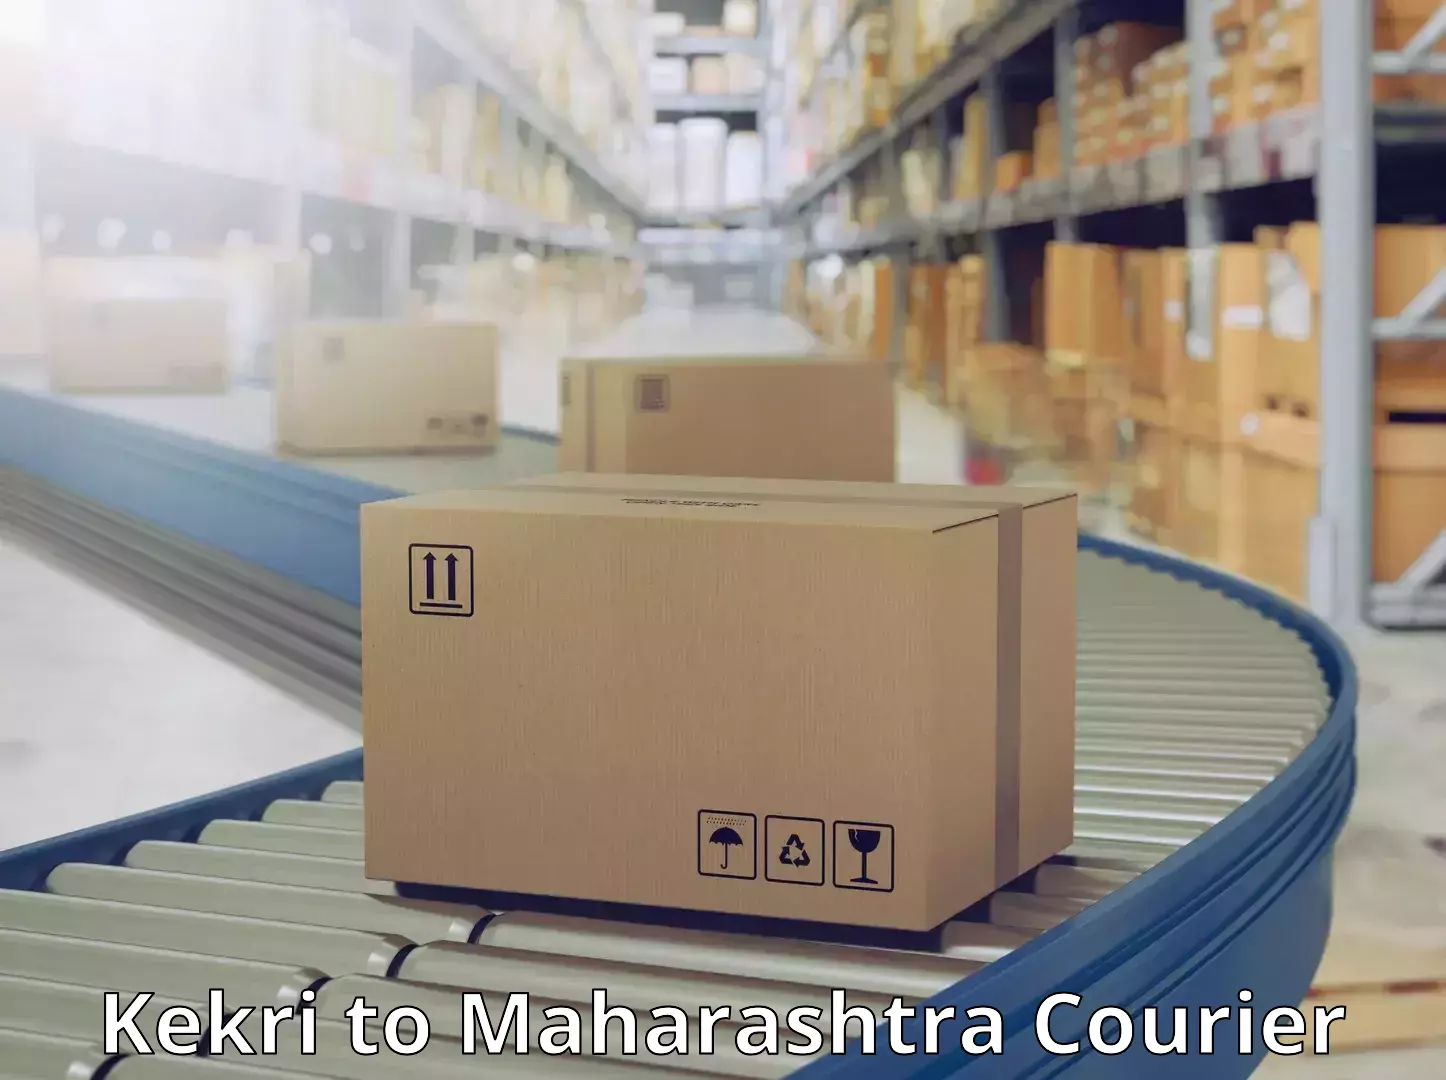 Supply chain delivery in Kekri to Savitribai Phule Pune University